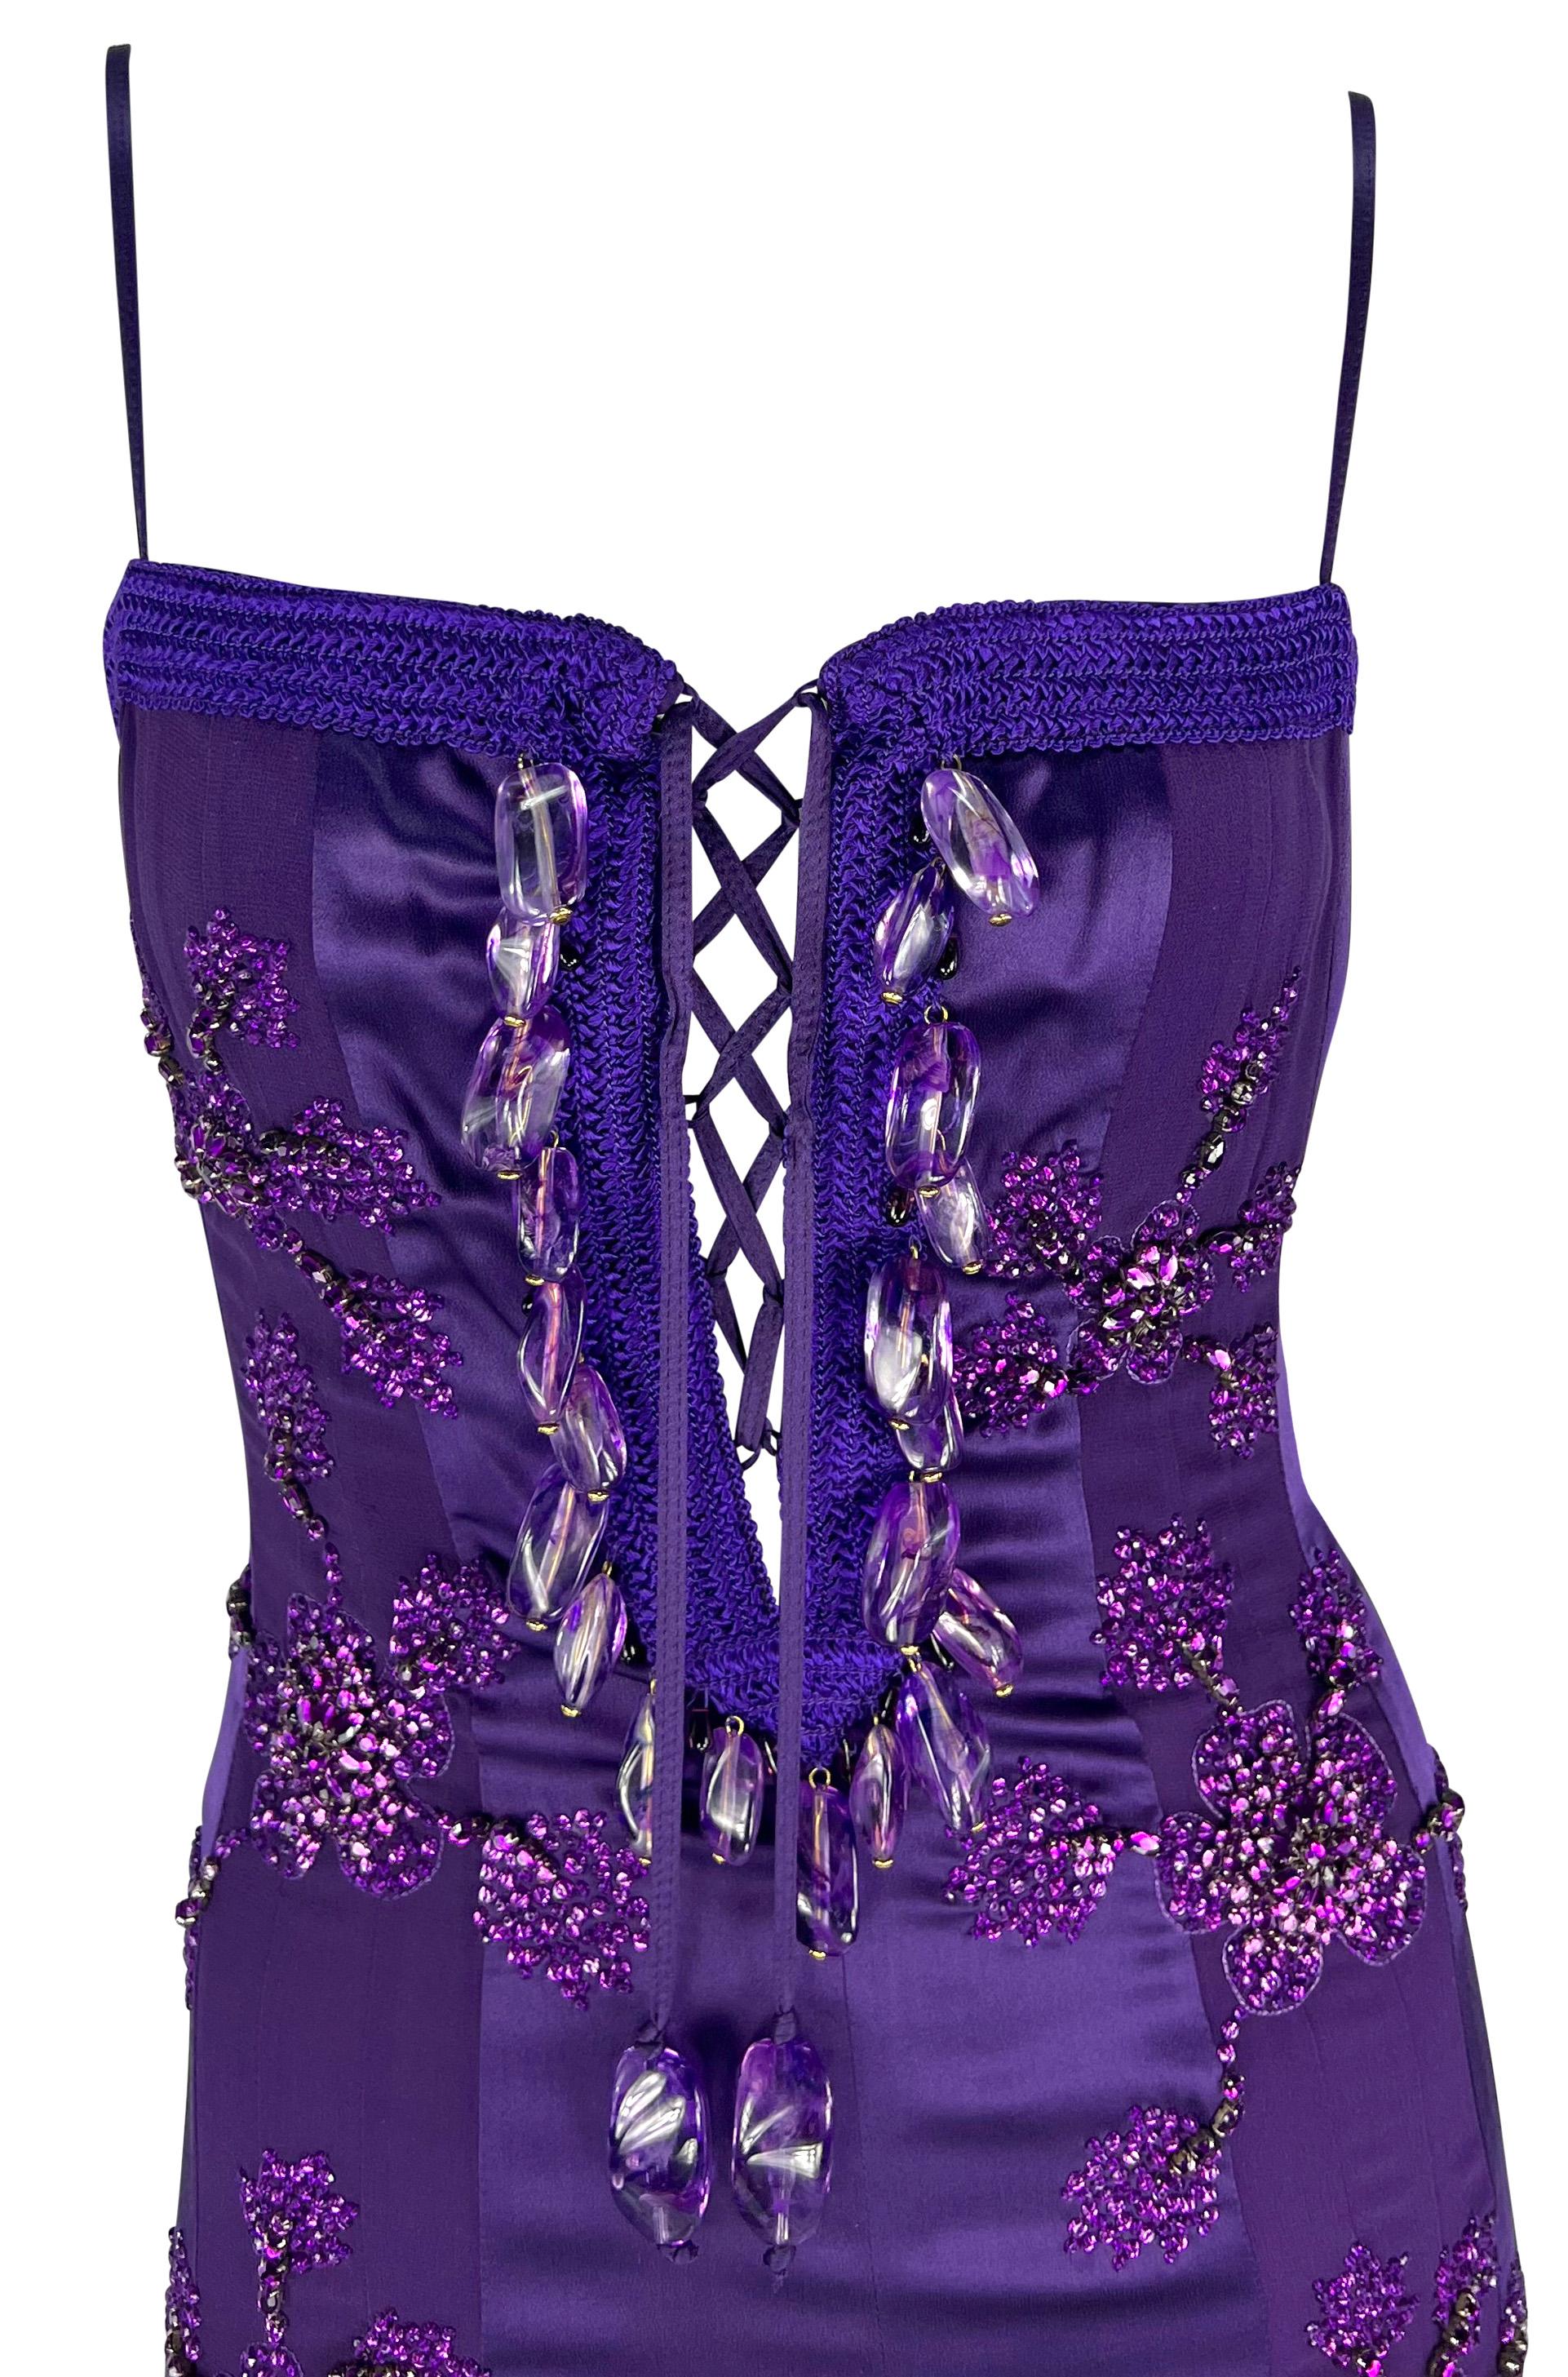 S/S 2005 Emanuel Ungaro by Giambattista Valli Rhinestone Purple Lace-Up Gown For Sale 1